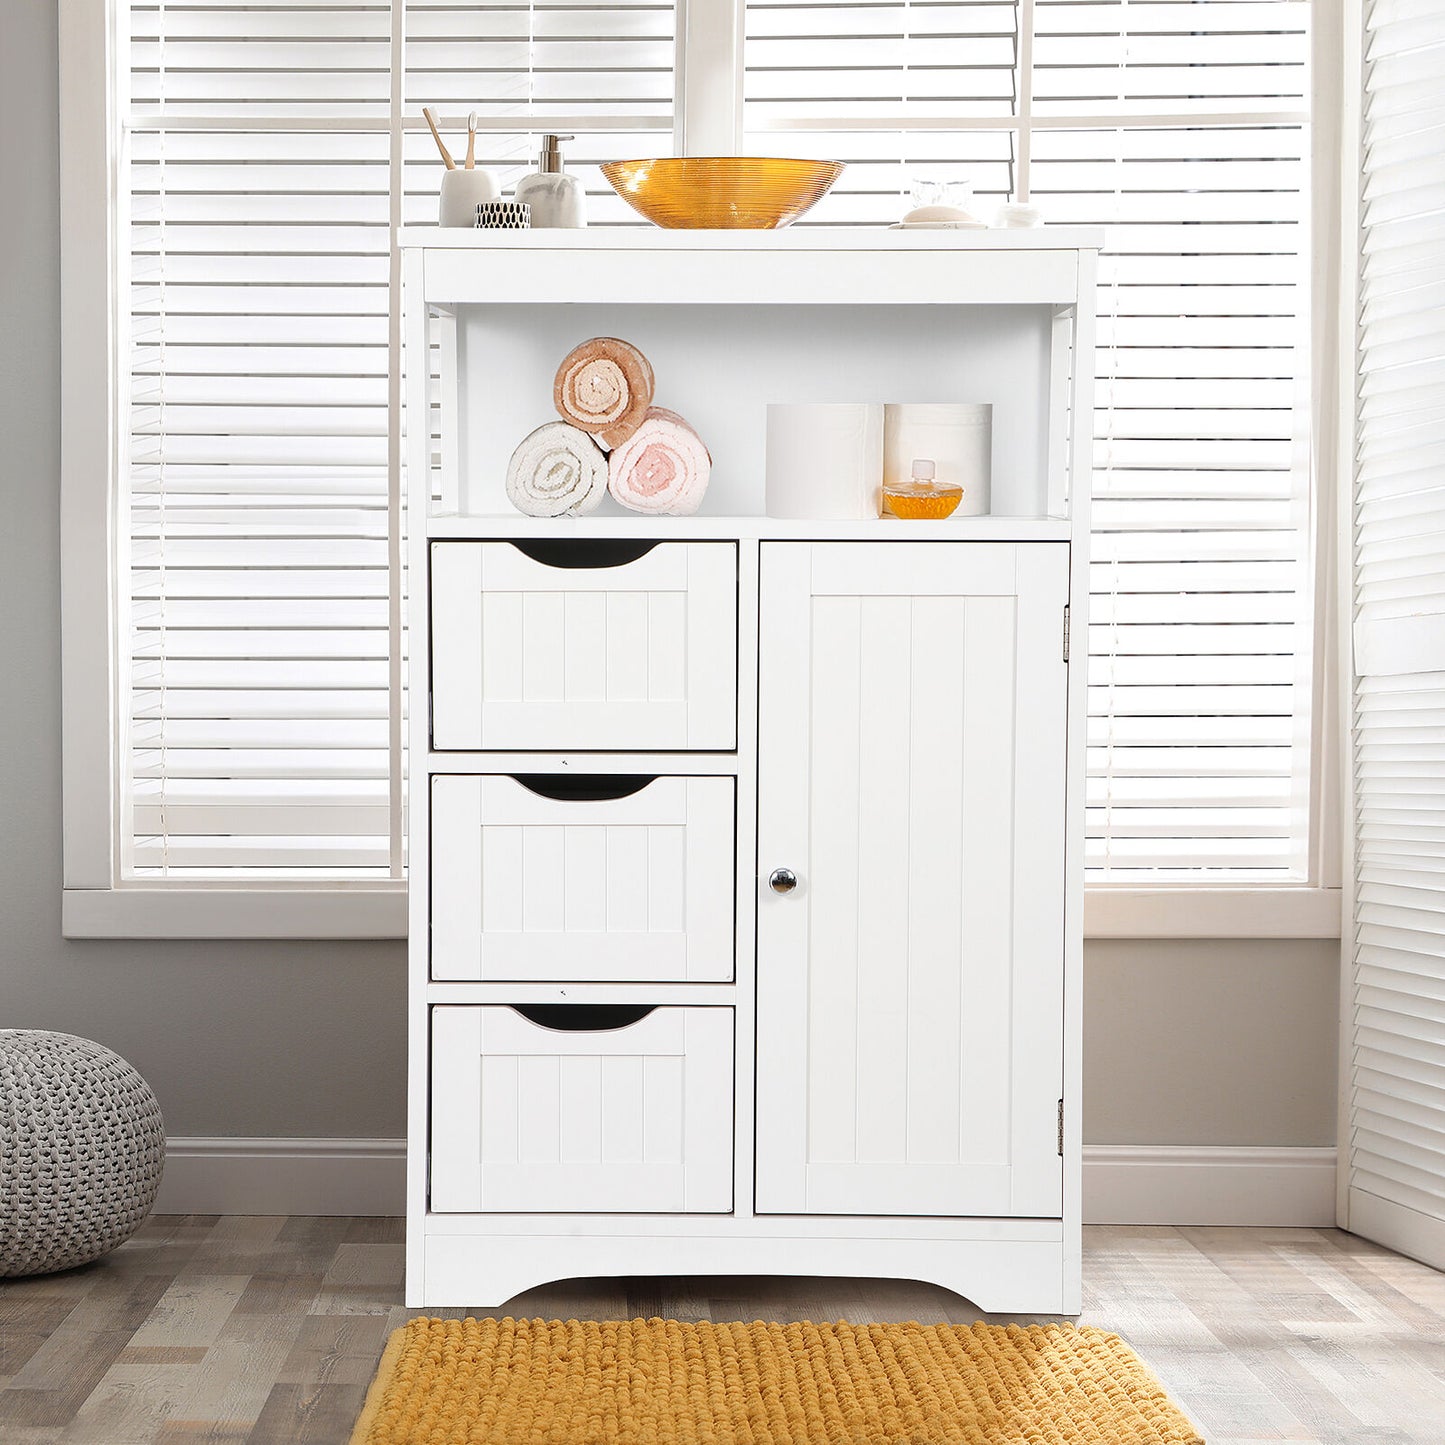 Bathroom Floor Cabinet Wooden Storage Organizer with 3 Drawers Adjustable Shelf